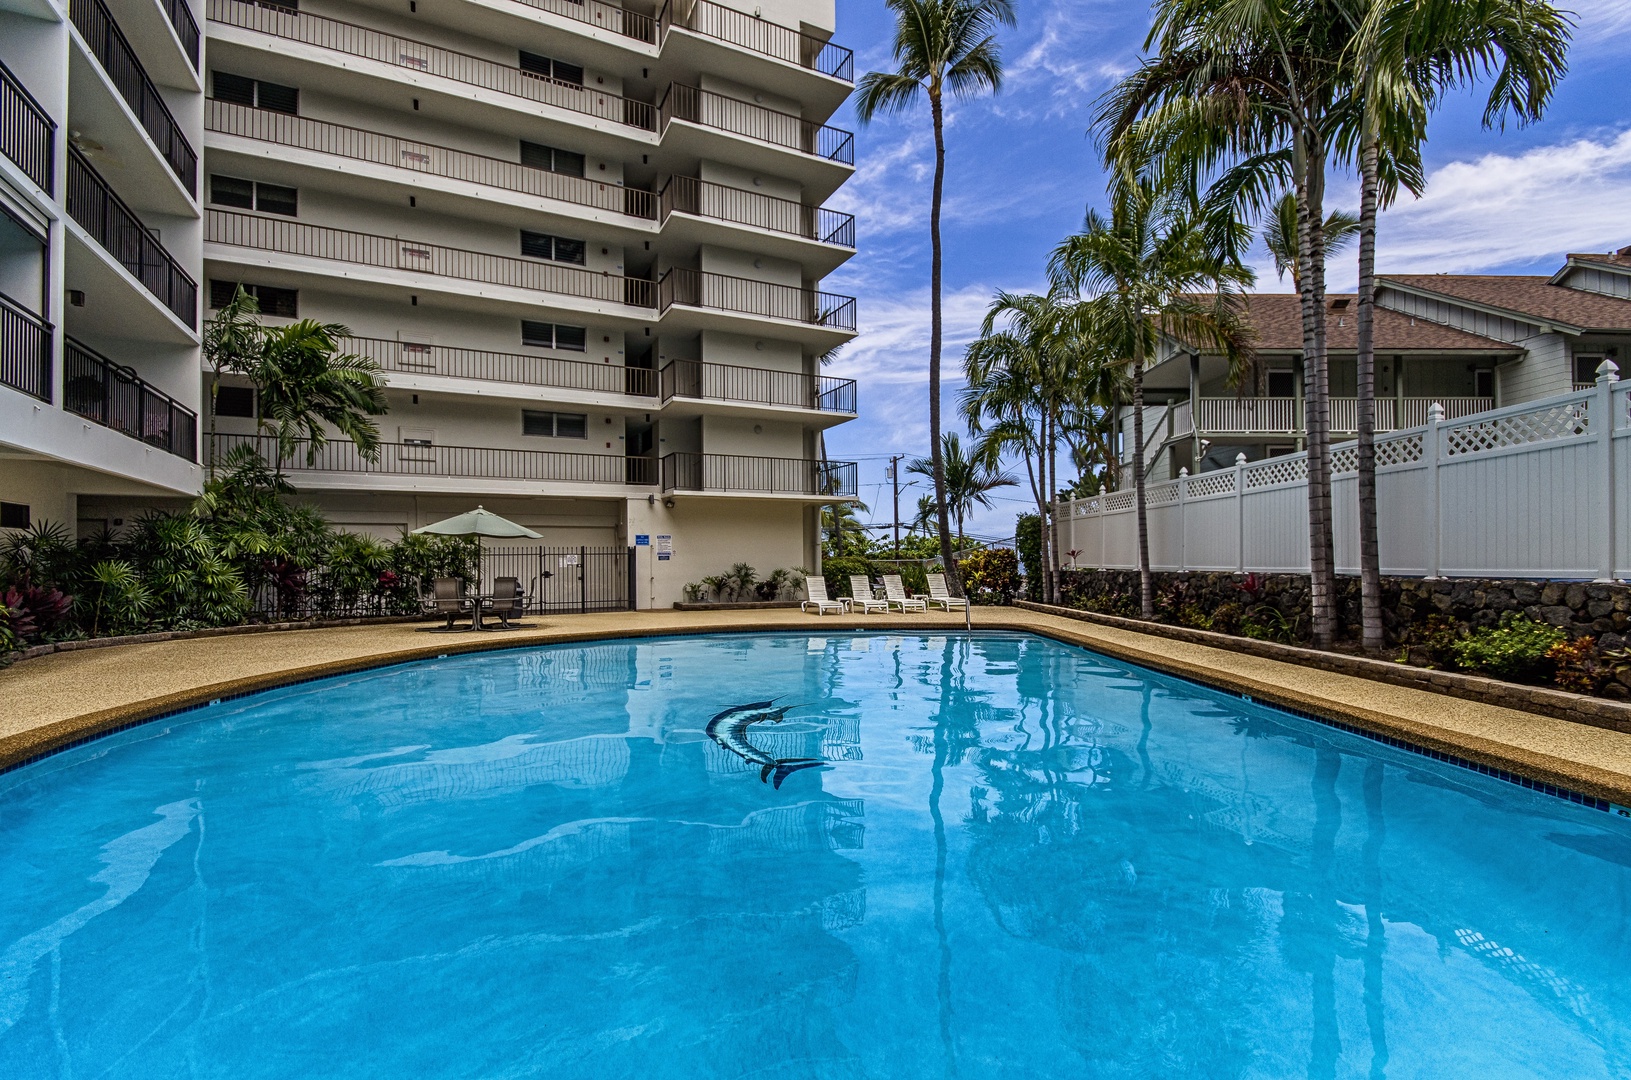 Kailua Kona Vacation Rentals, Kona Alii 304 - Community pool with BBQs and lounge seating